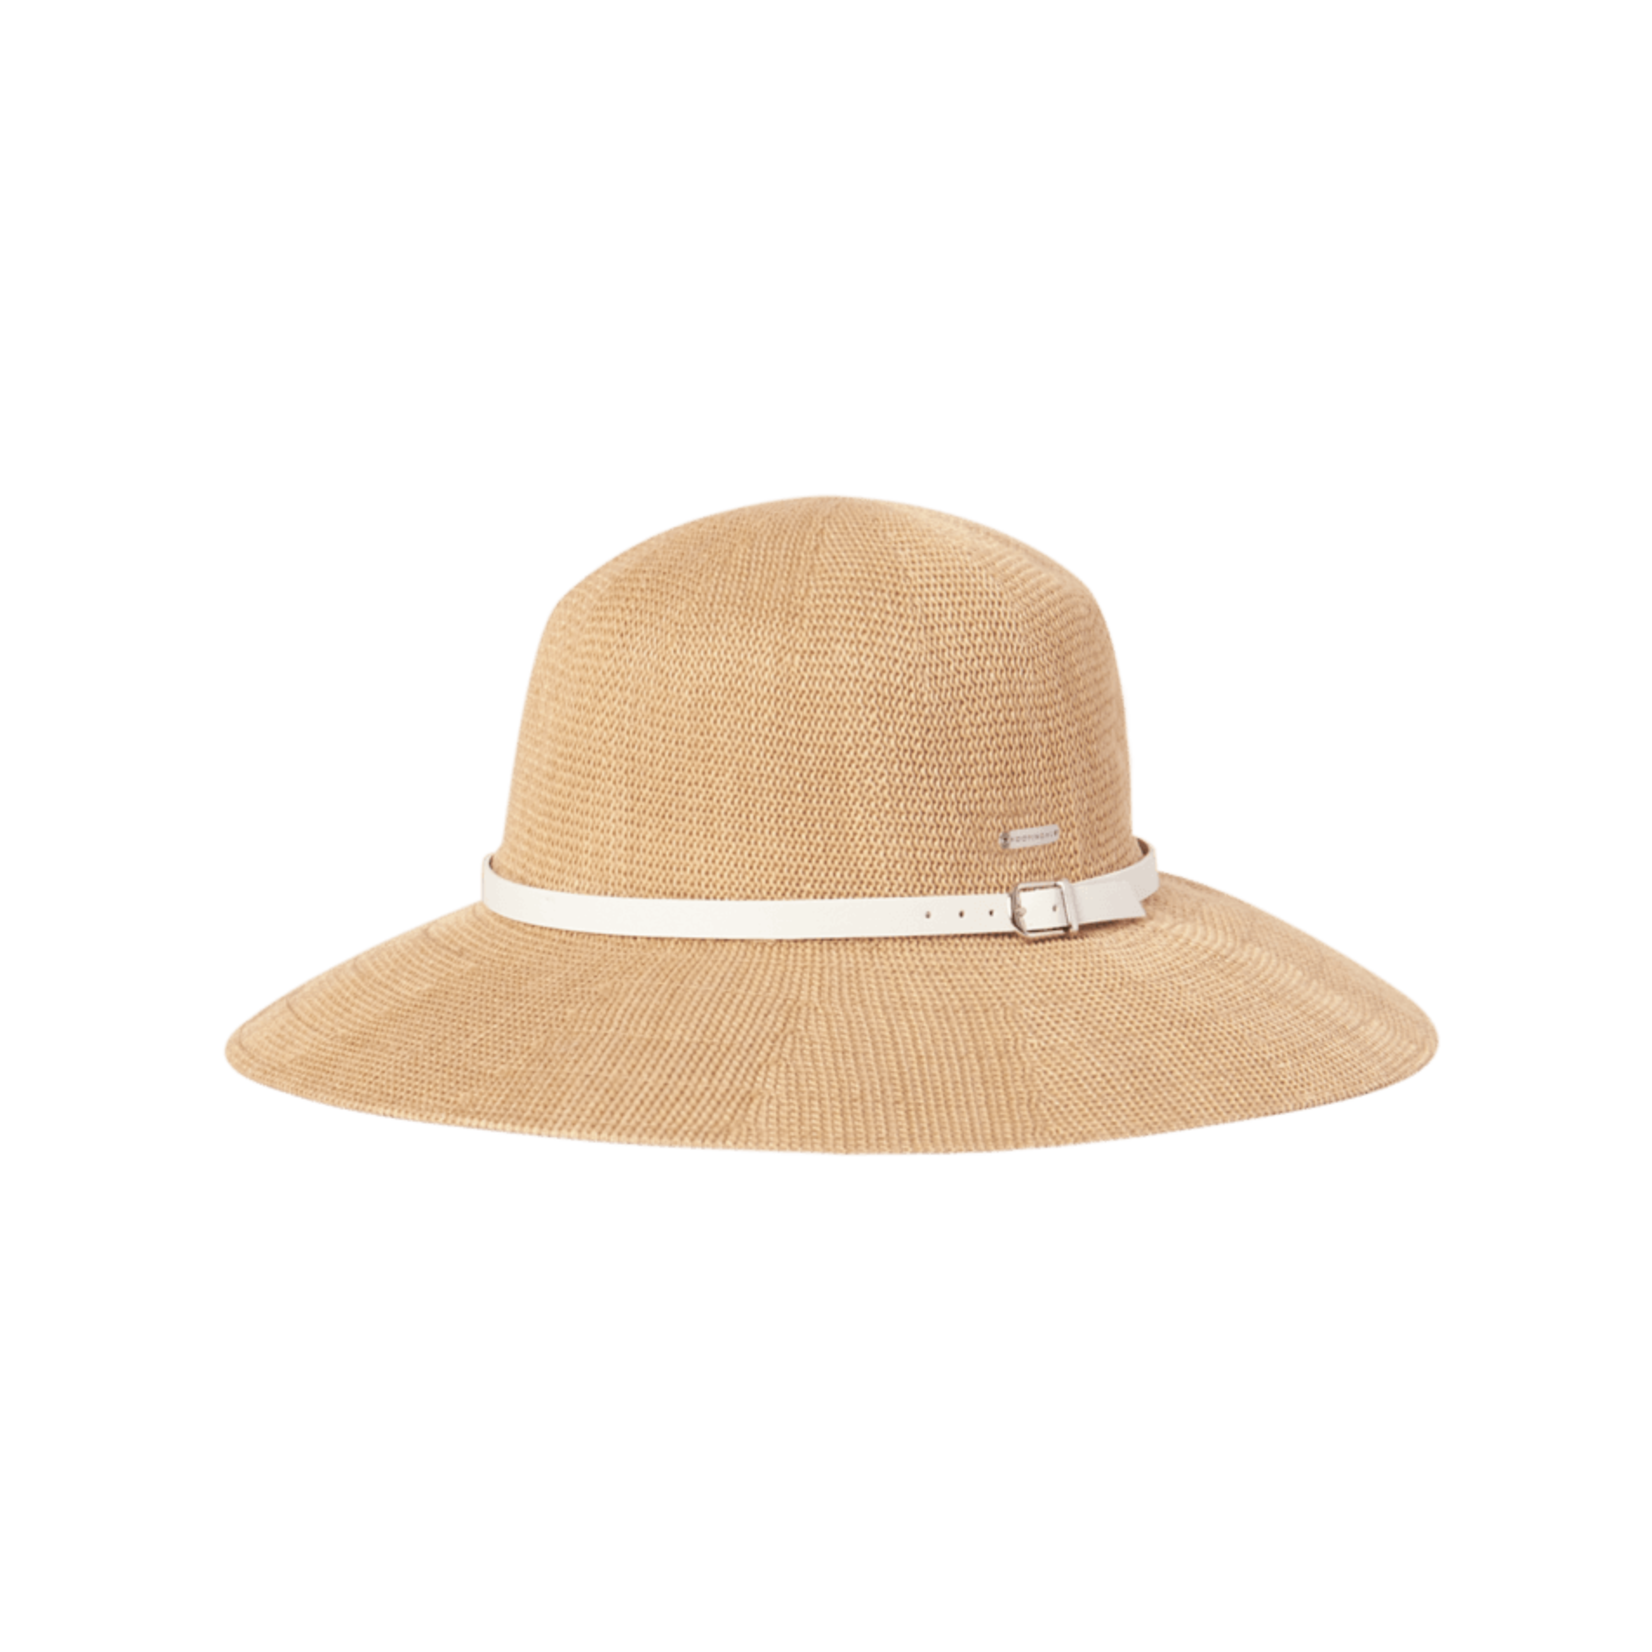 Kooringal Leslie Wide Brim Hat in Natural/White